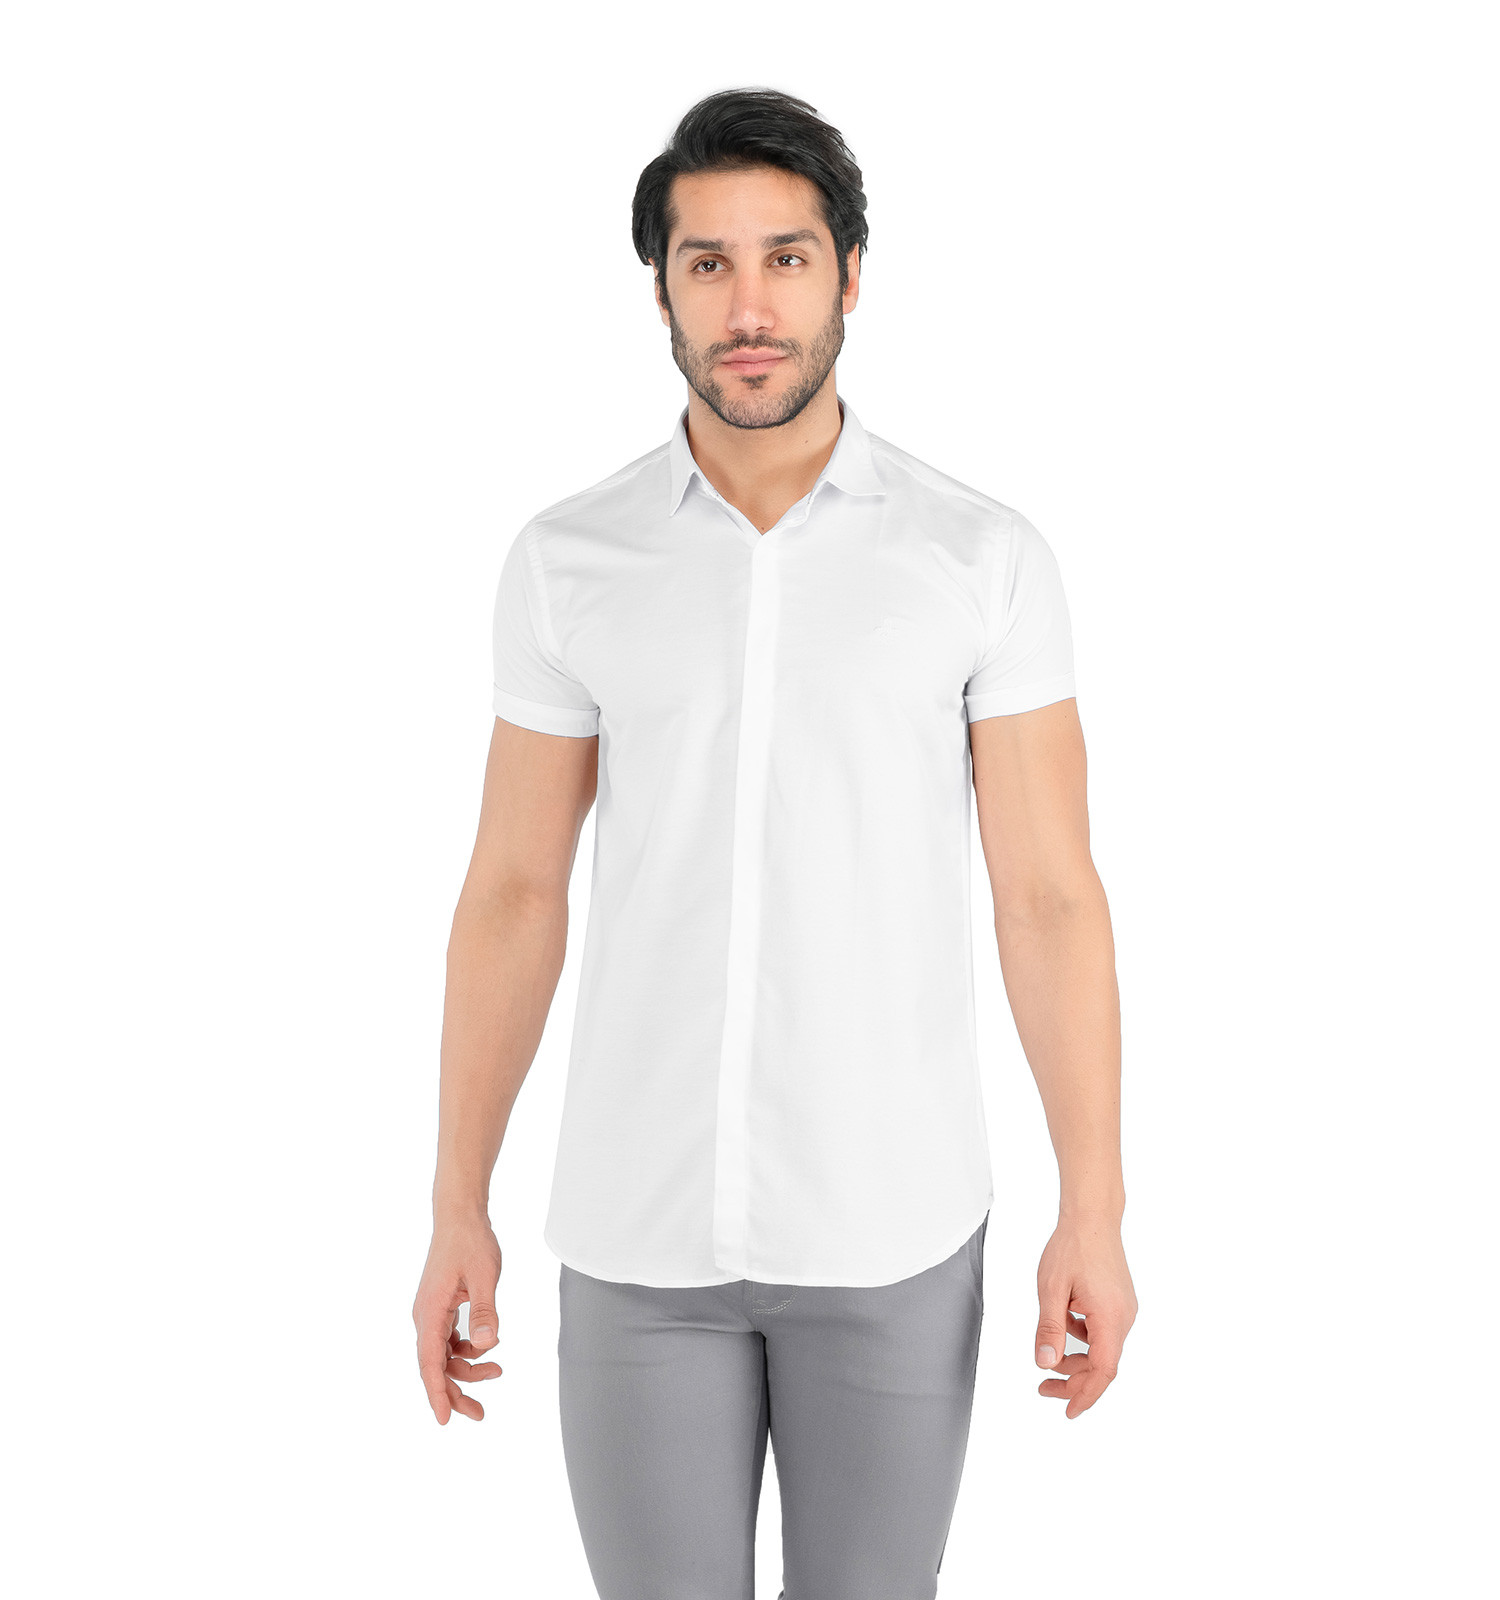 https://botick.com/product/1564082-پیراهن-اسپرت-مردانه-آستین-کوتاه-سفید-ساده-مدل-42375